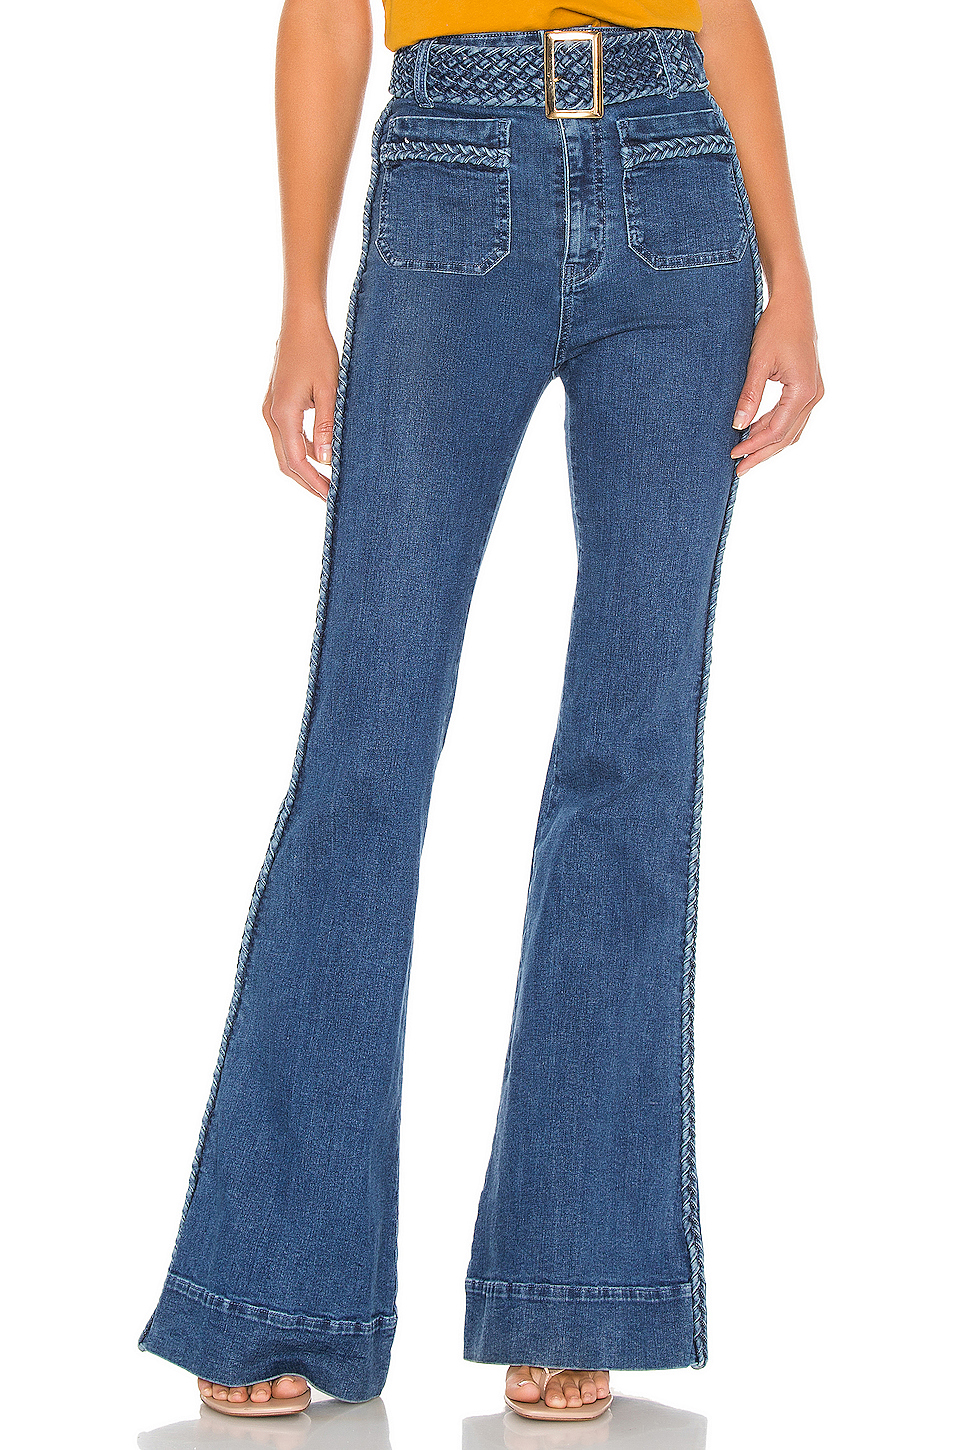 Denim / Pants - Jeans - Basically Beautiful